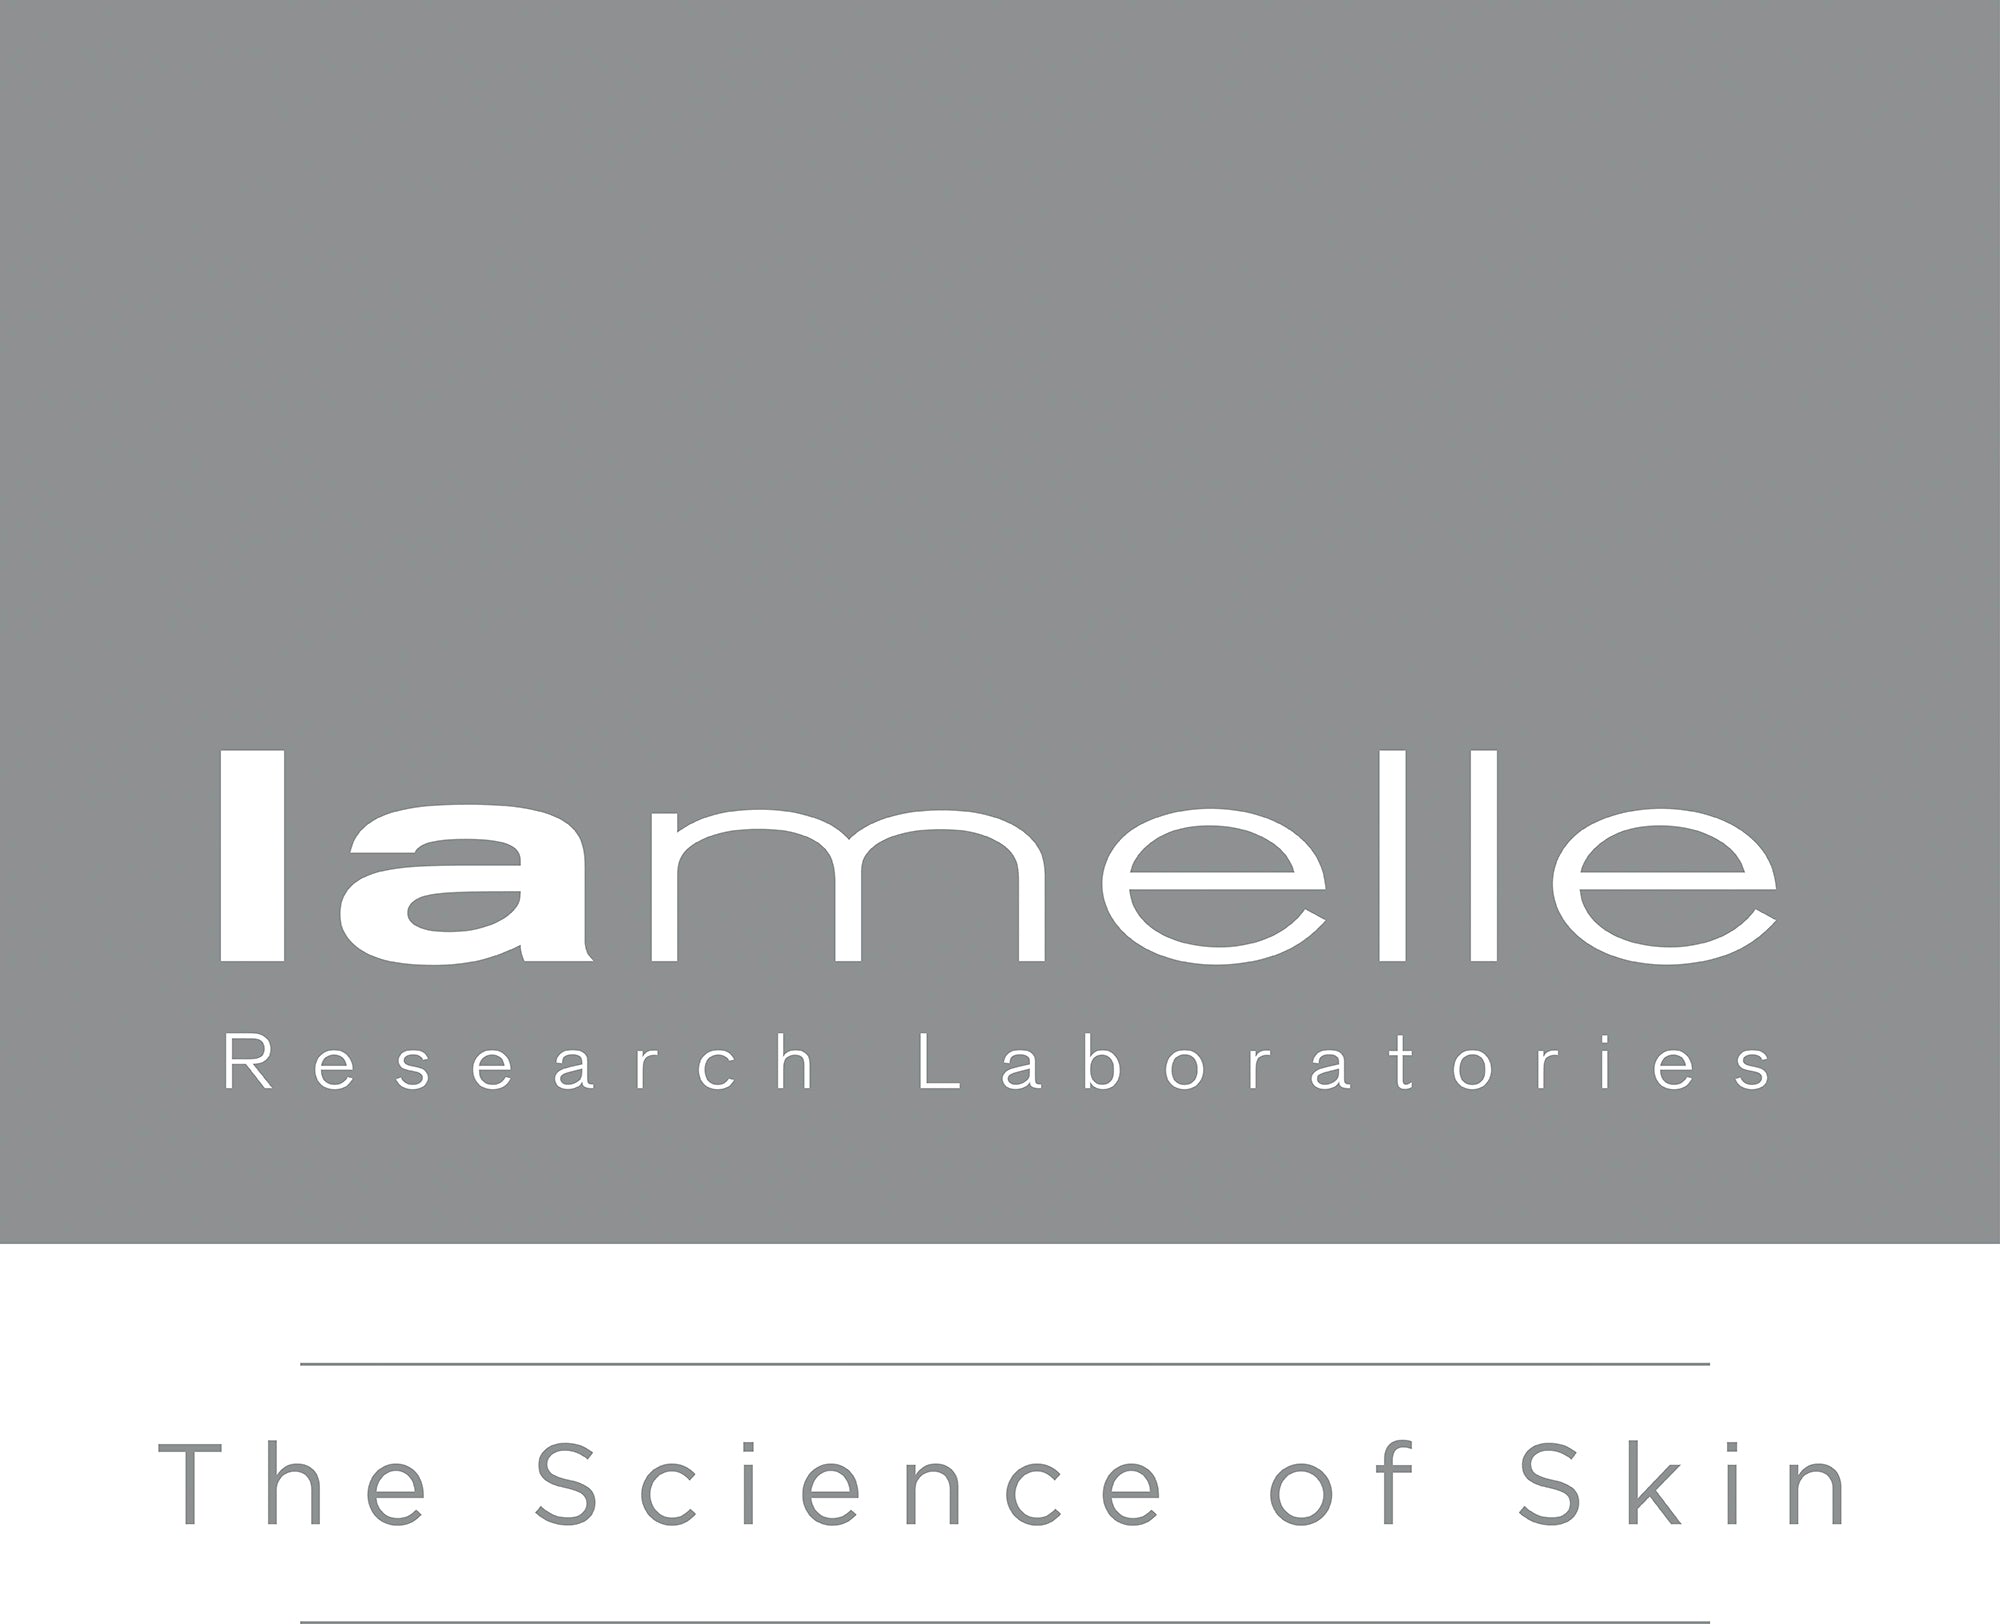 Dermaheal Ultra Renewal Cream | Lamelle